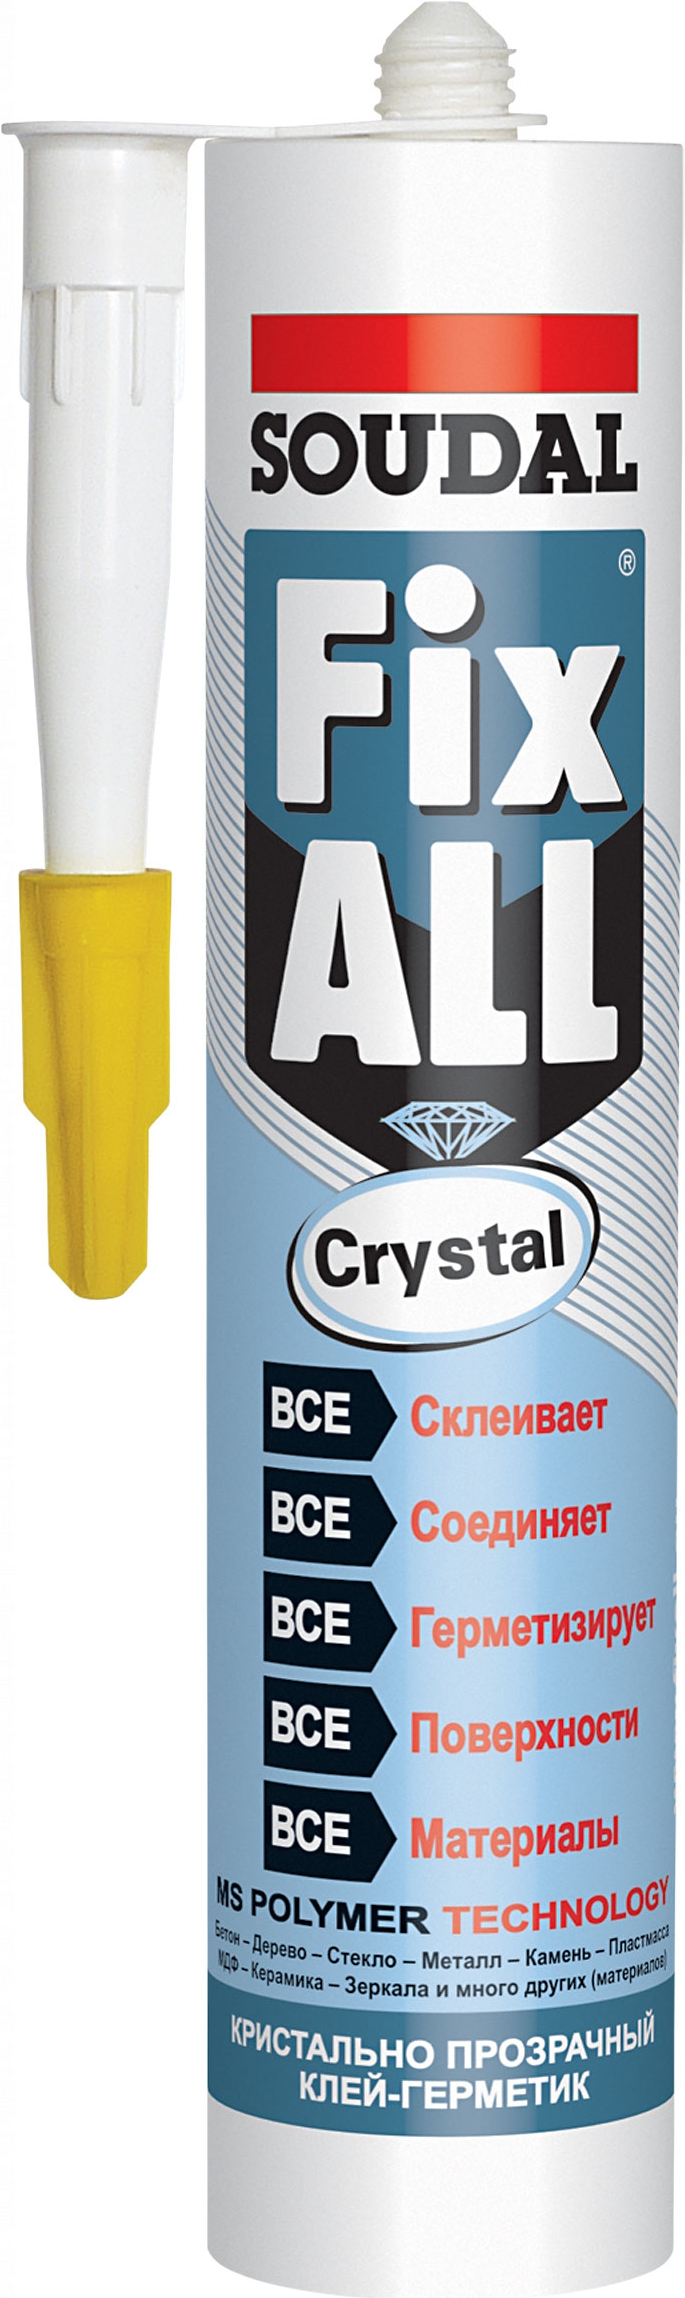 Soudal Fix All Crystal. Прозрачный клей-герметик Бельгия.